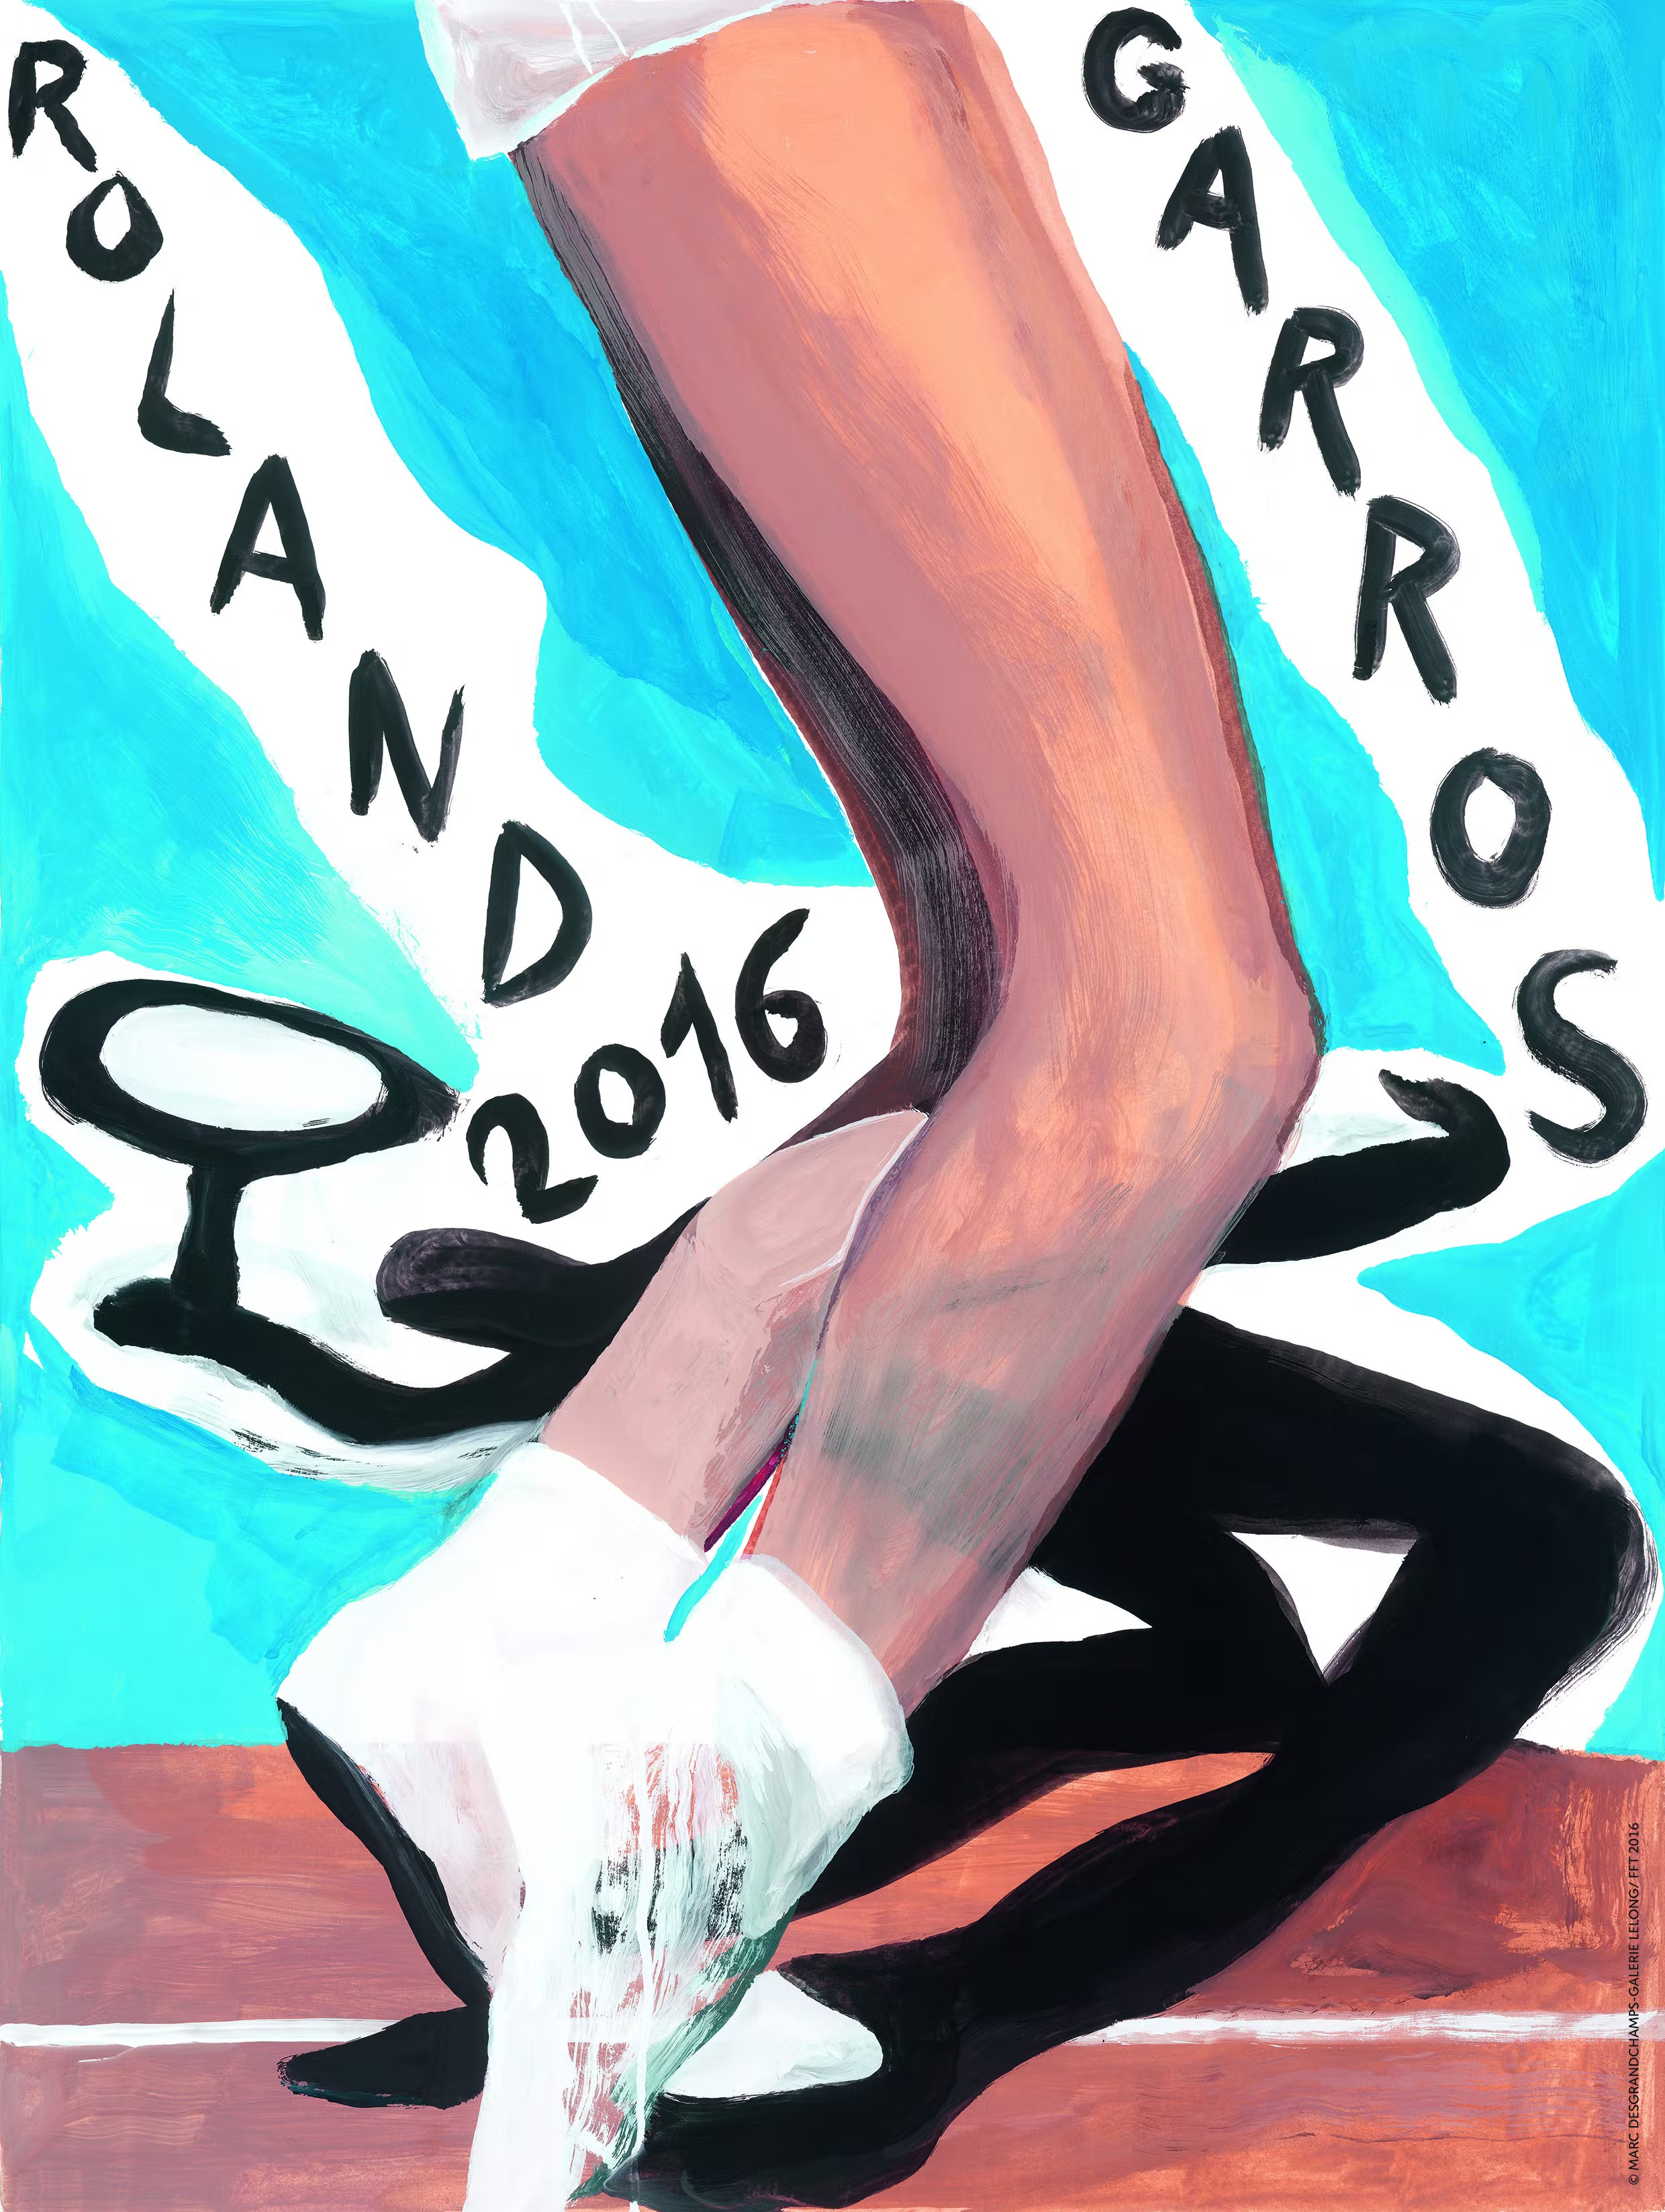 Roland Garros 2016 poster